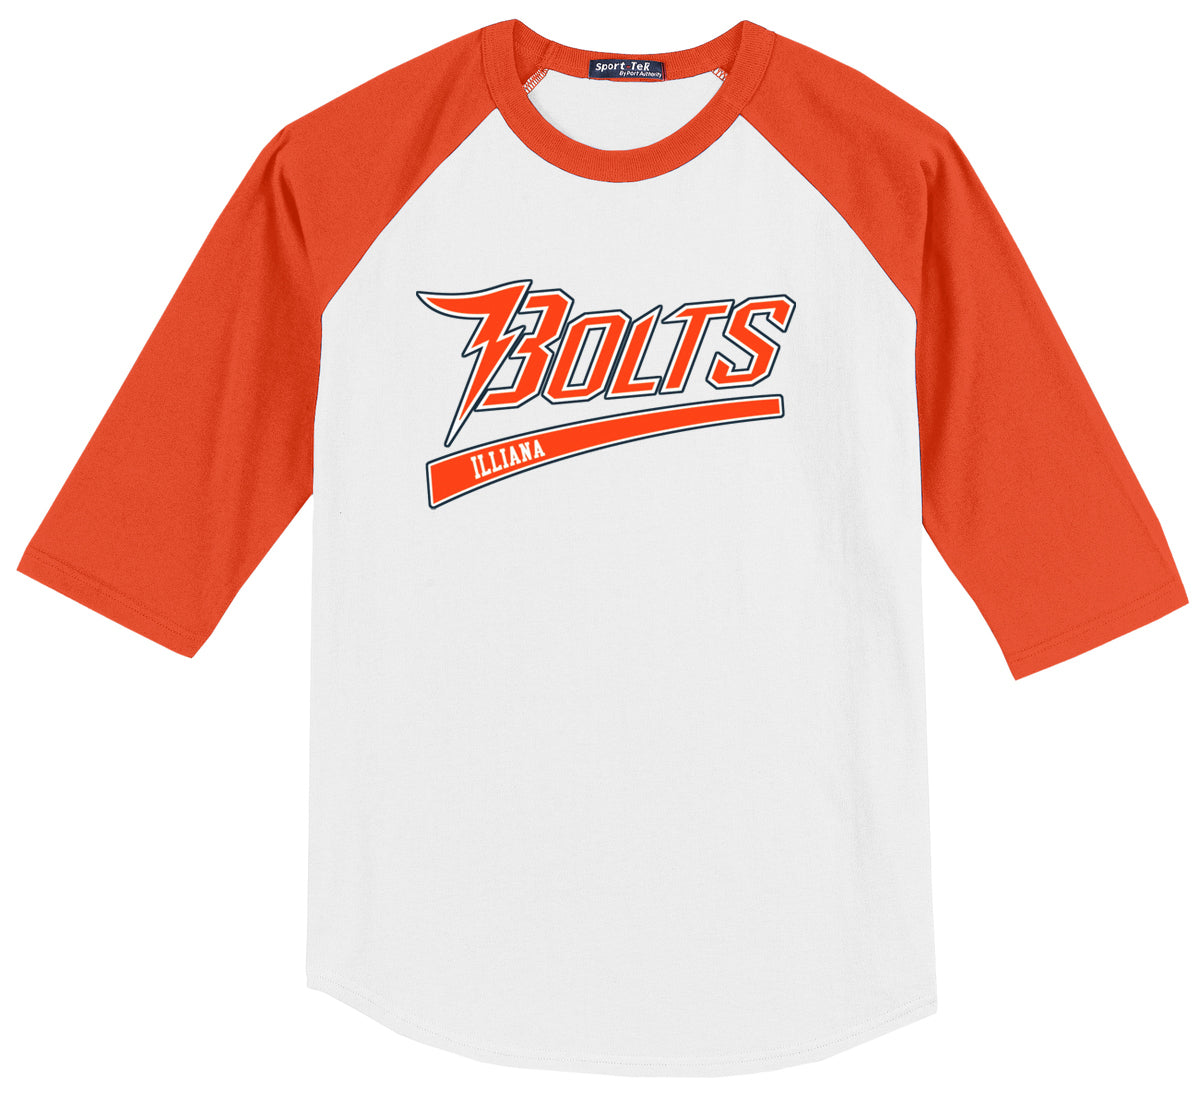 Illiana Thunderbolts White/Orange 3/4 Sleeve Baseball Shirt: Bolts Logo